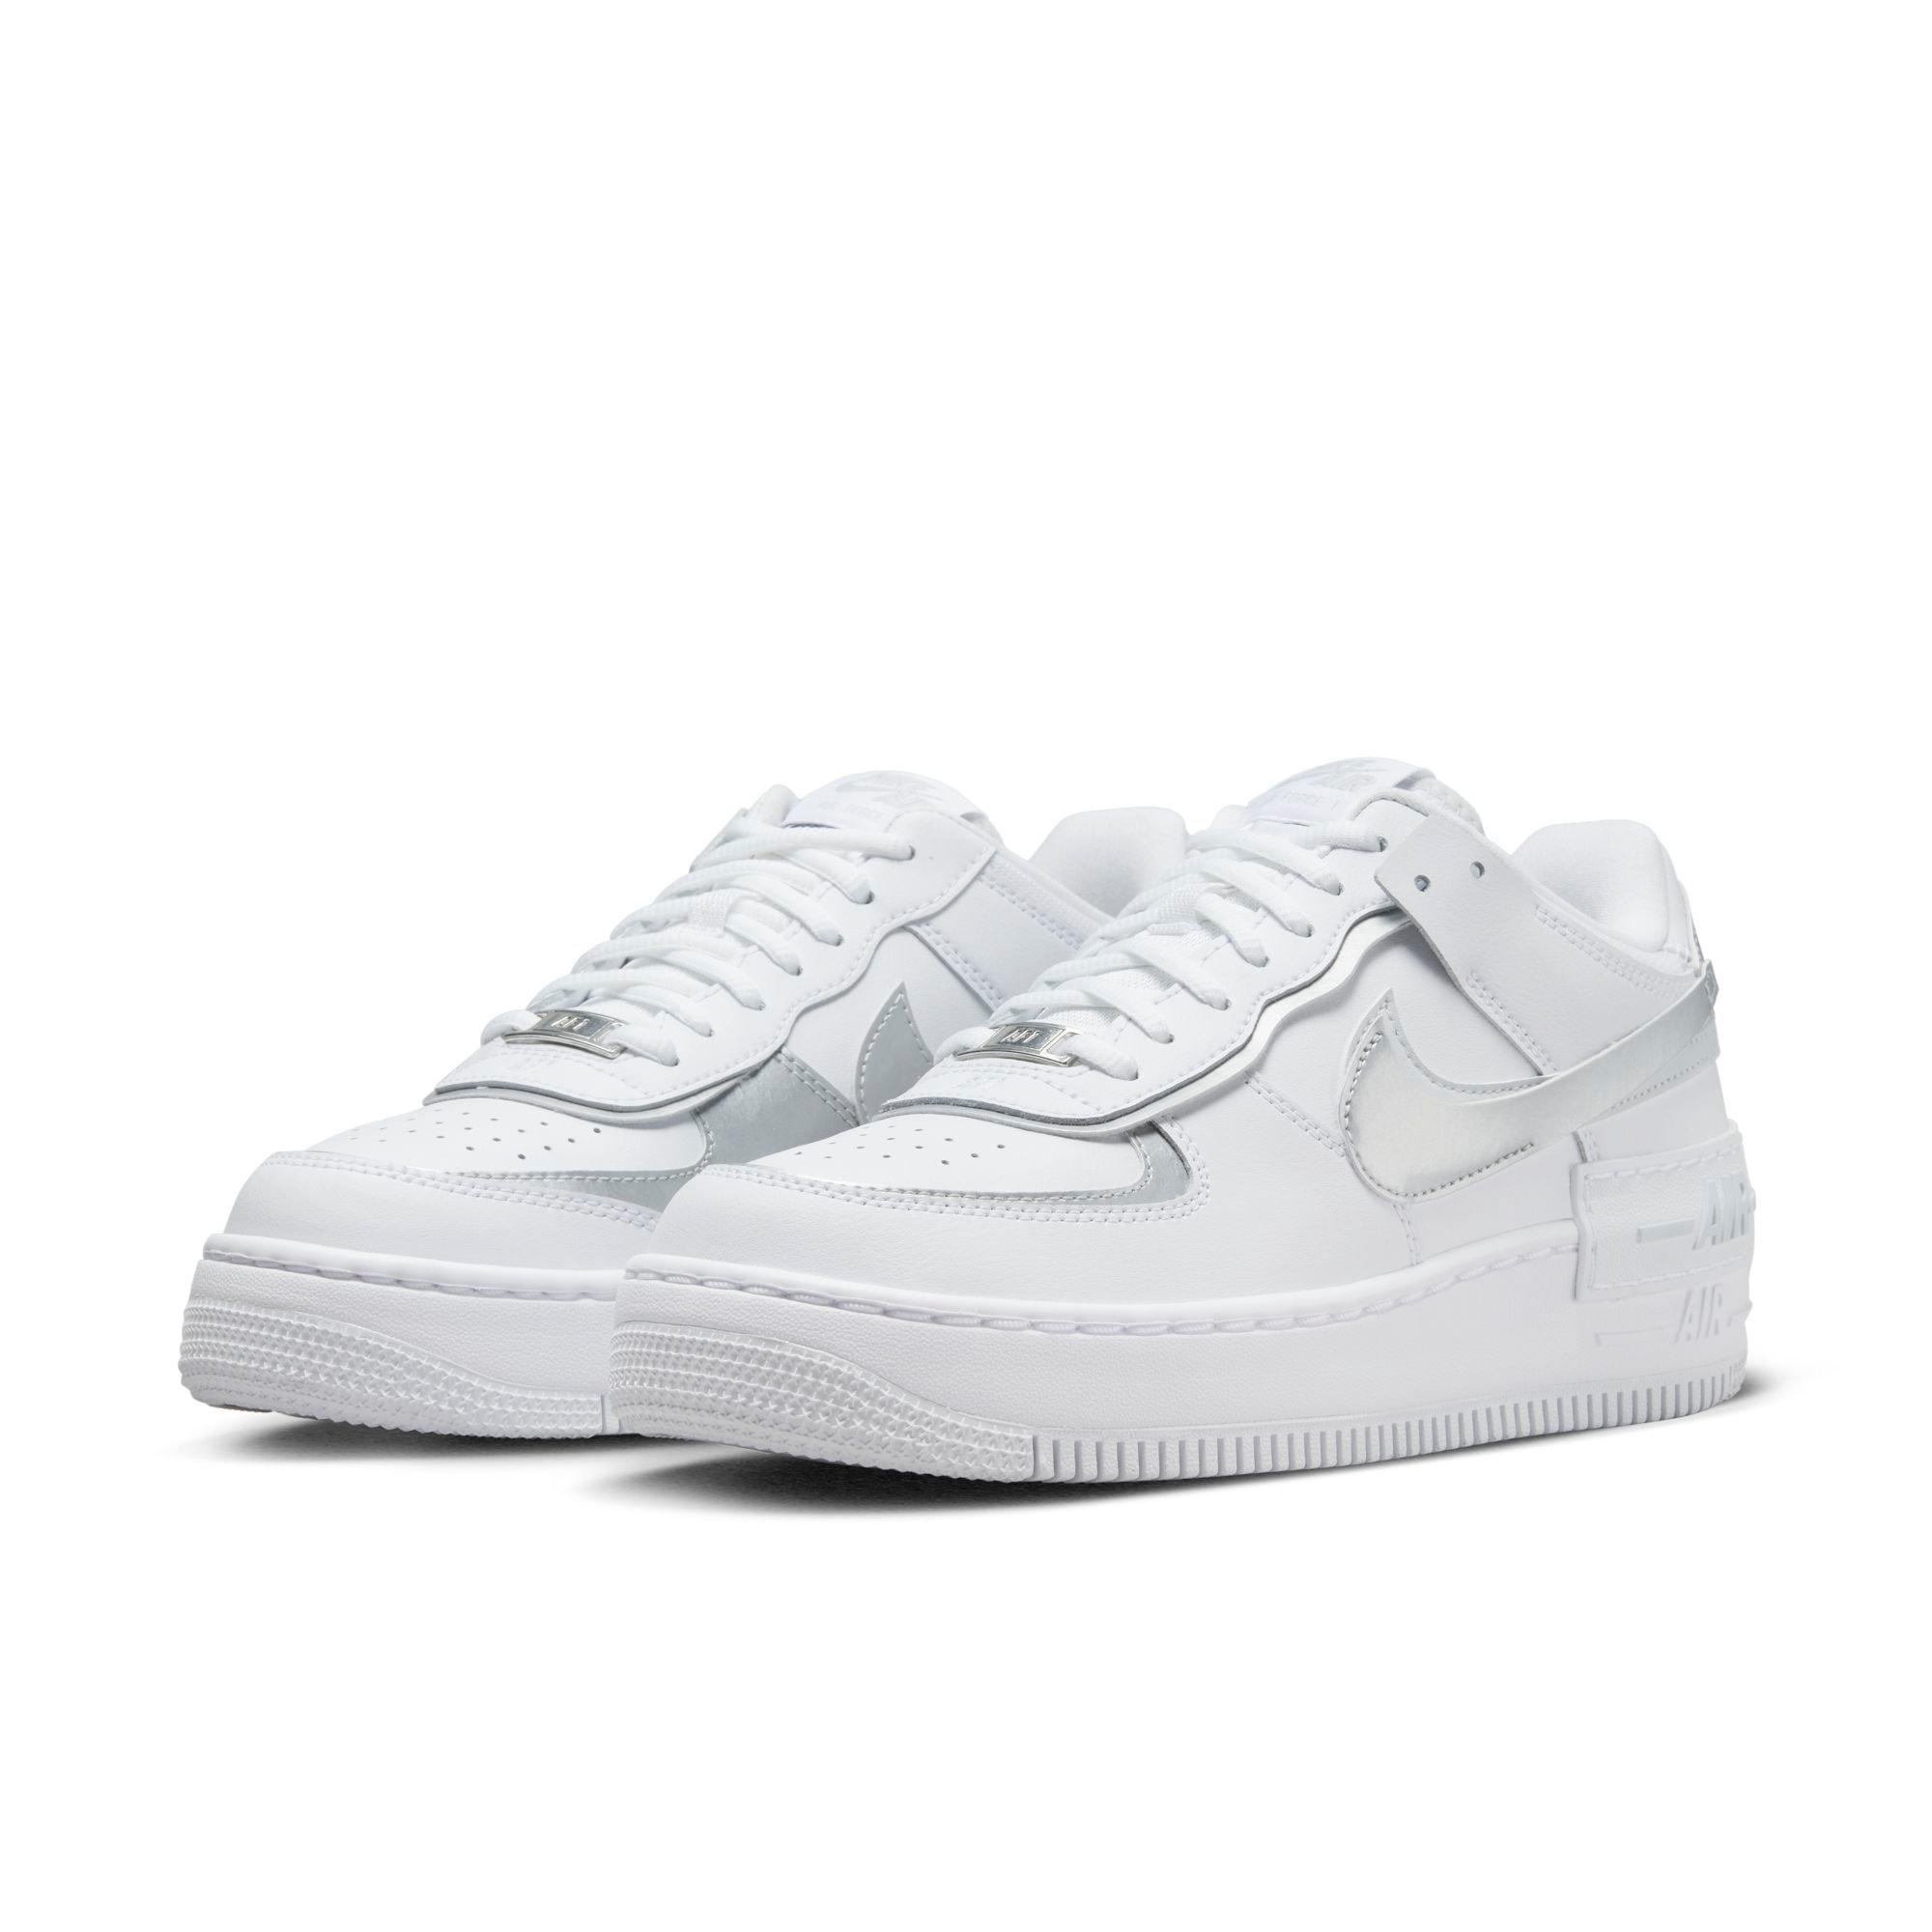 Nike Women's Air Force 1 Shadow Shoes, Size 7.5, White/Metallic Silver